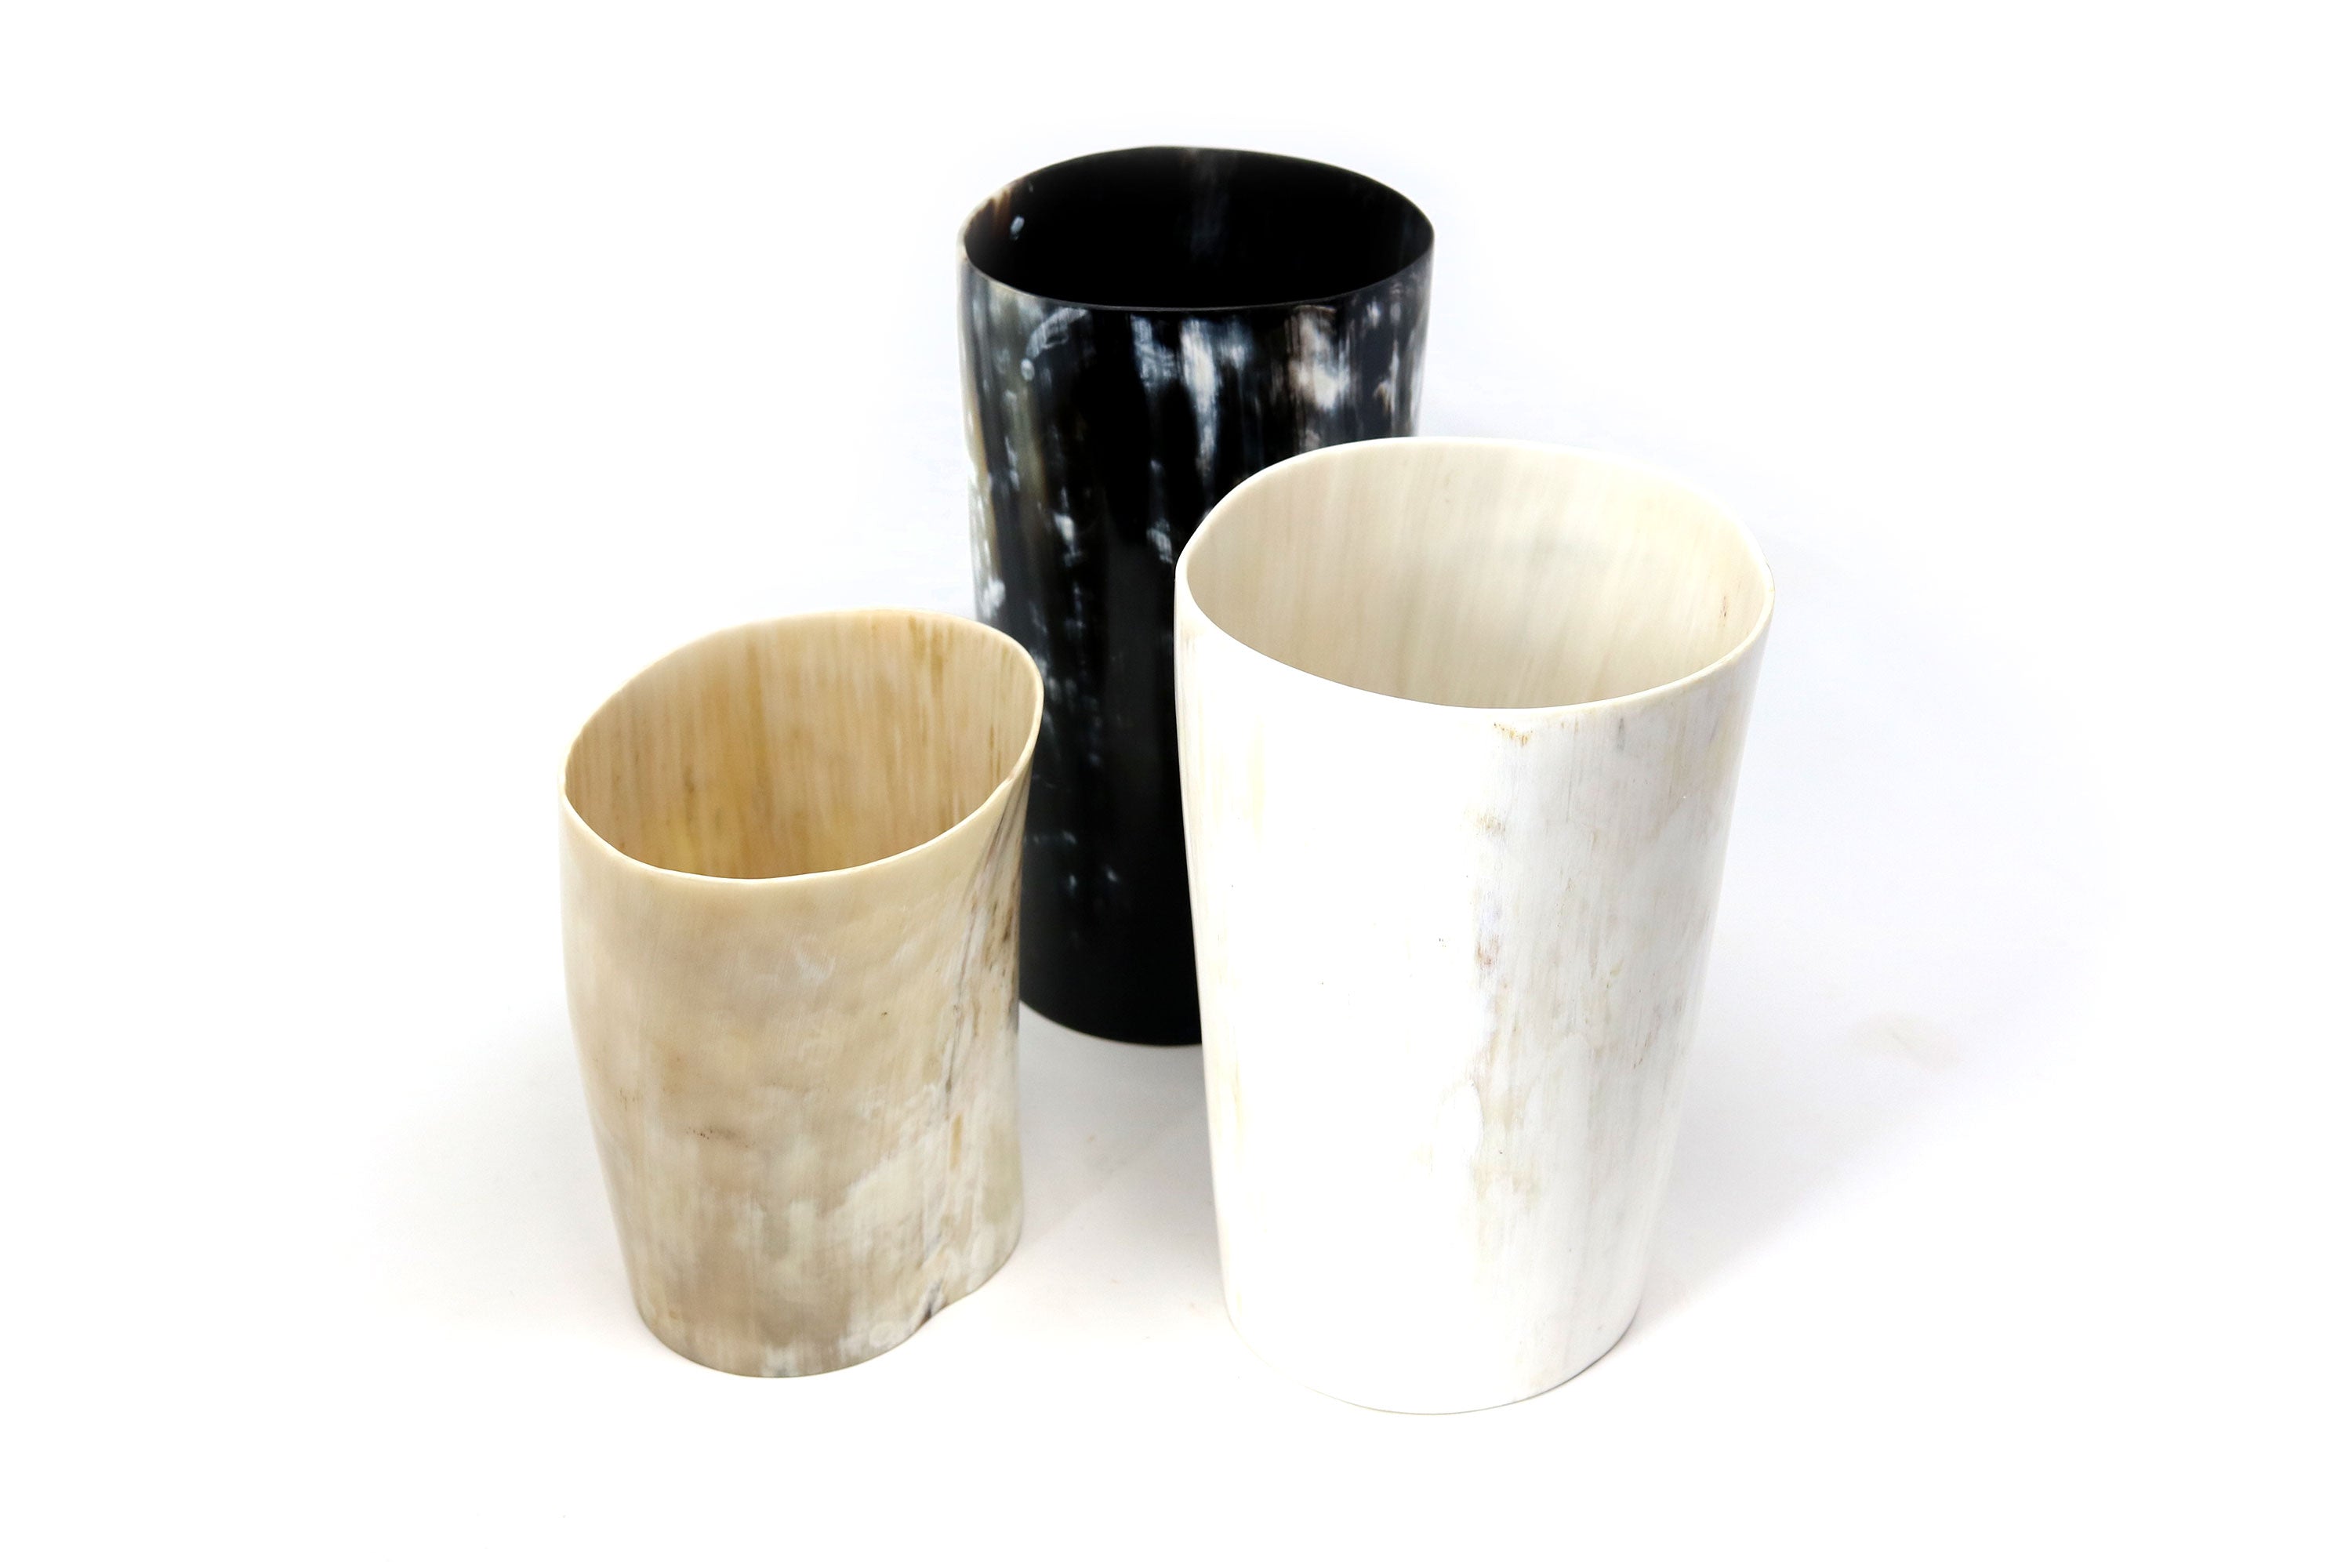 Ankole Cow Horn Vase, various sizes